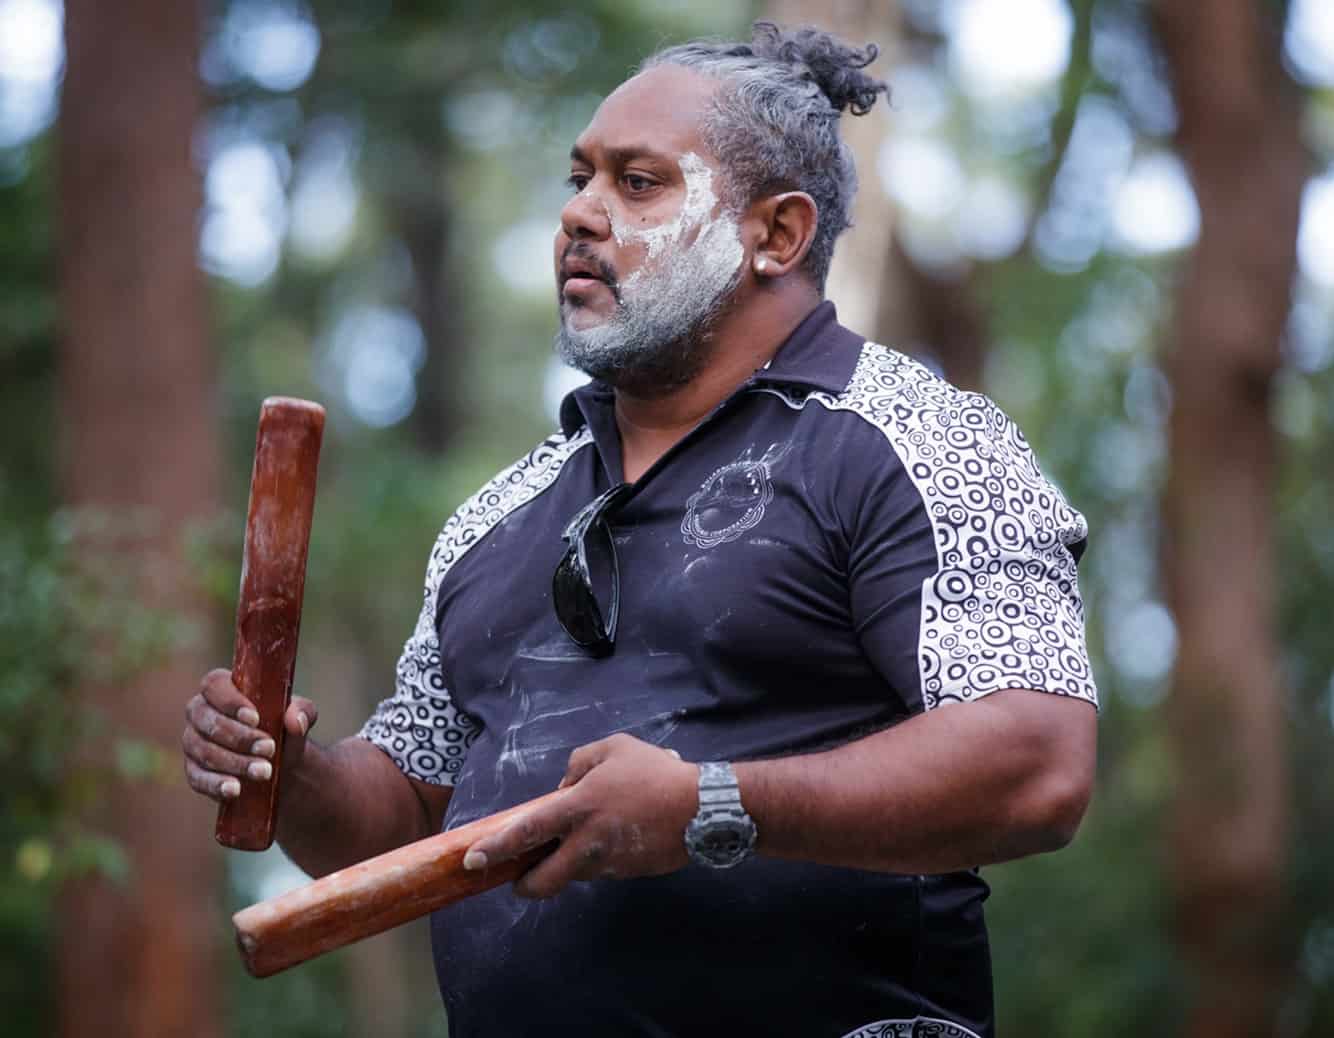 Aboriginal man in paint performs cultural customs